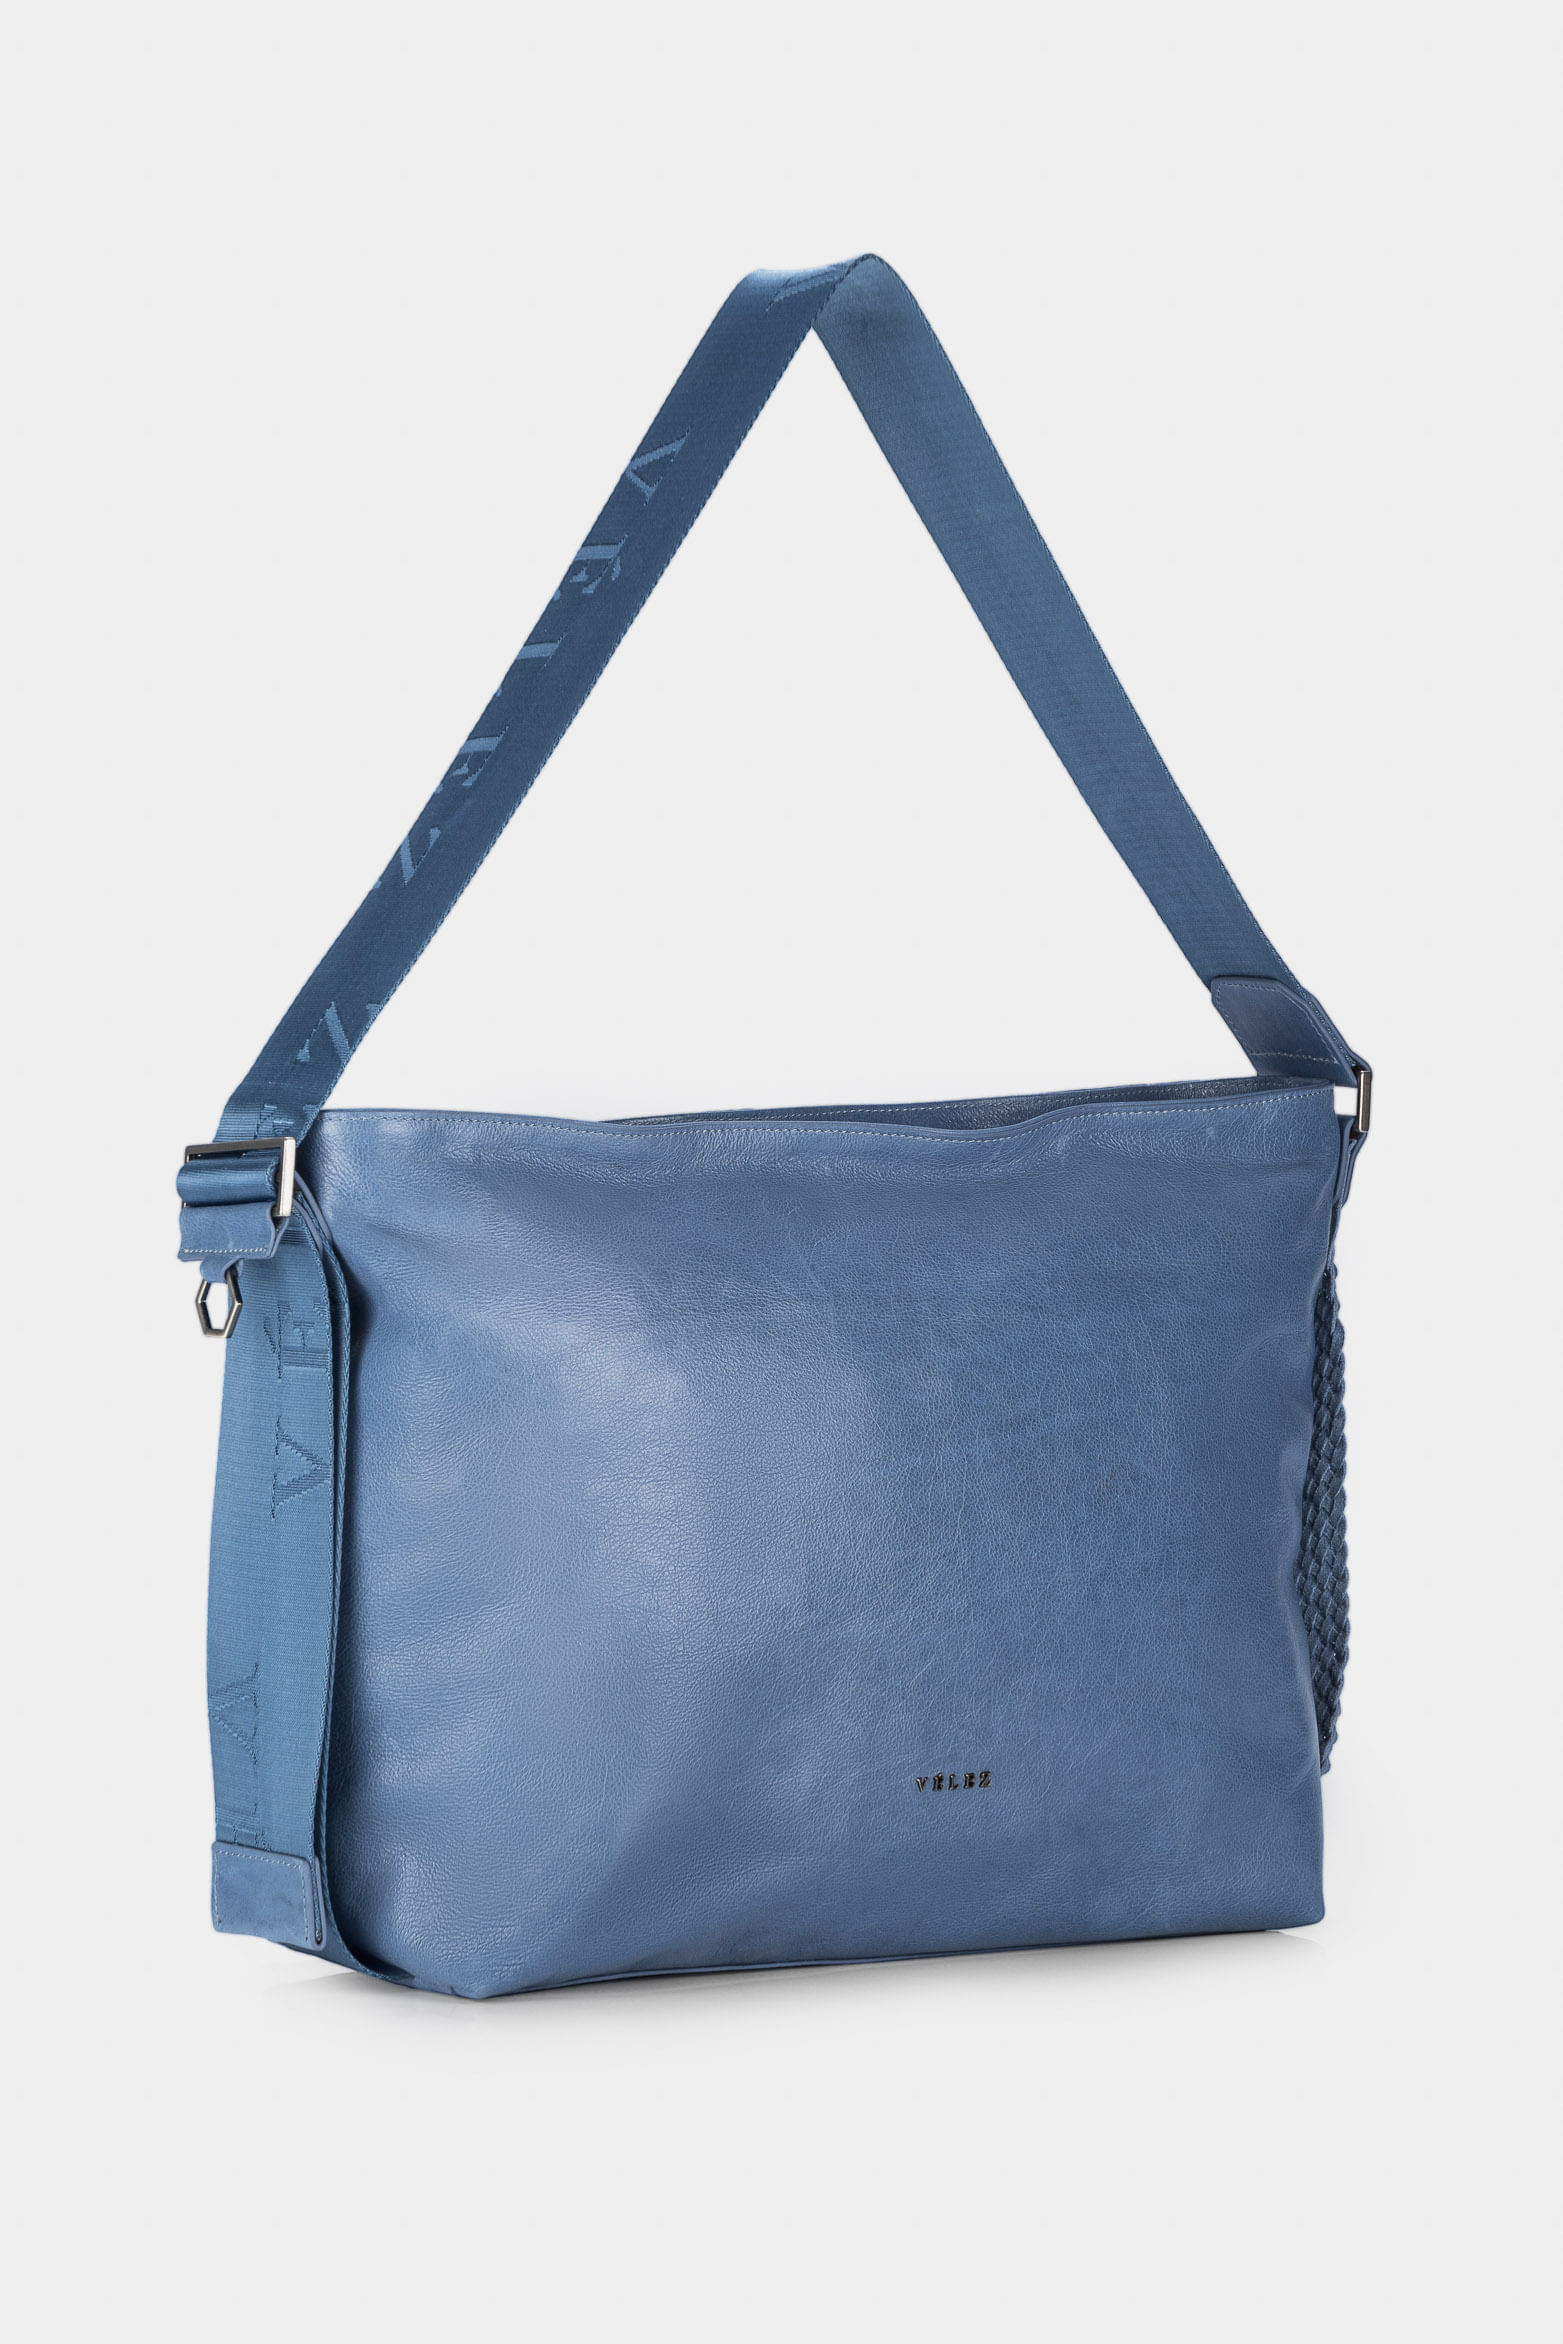 Bally Staz Textured Navy Blue Leather Business Bag 6207737 7612509812225 -  Handbags, Staz - Jomashop